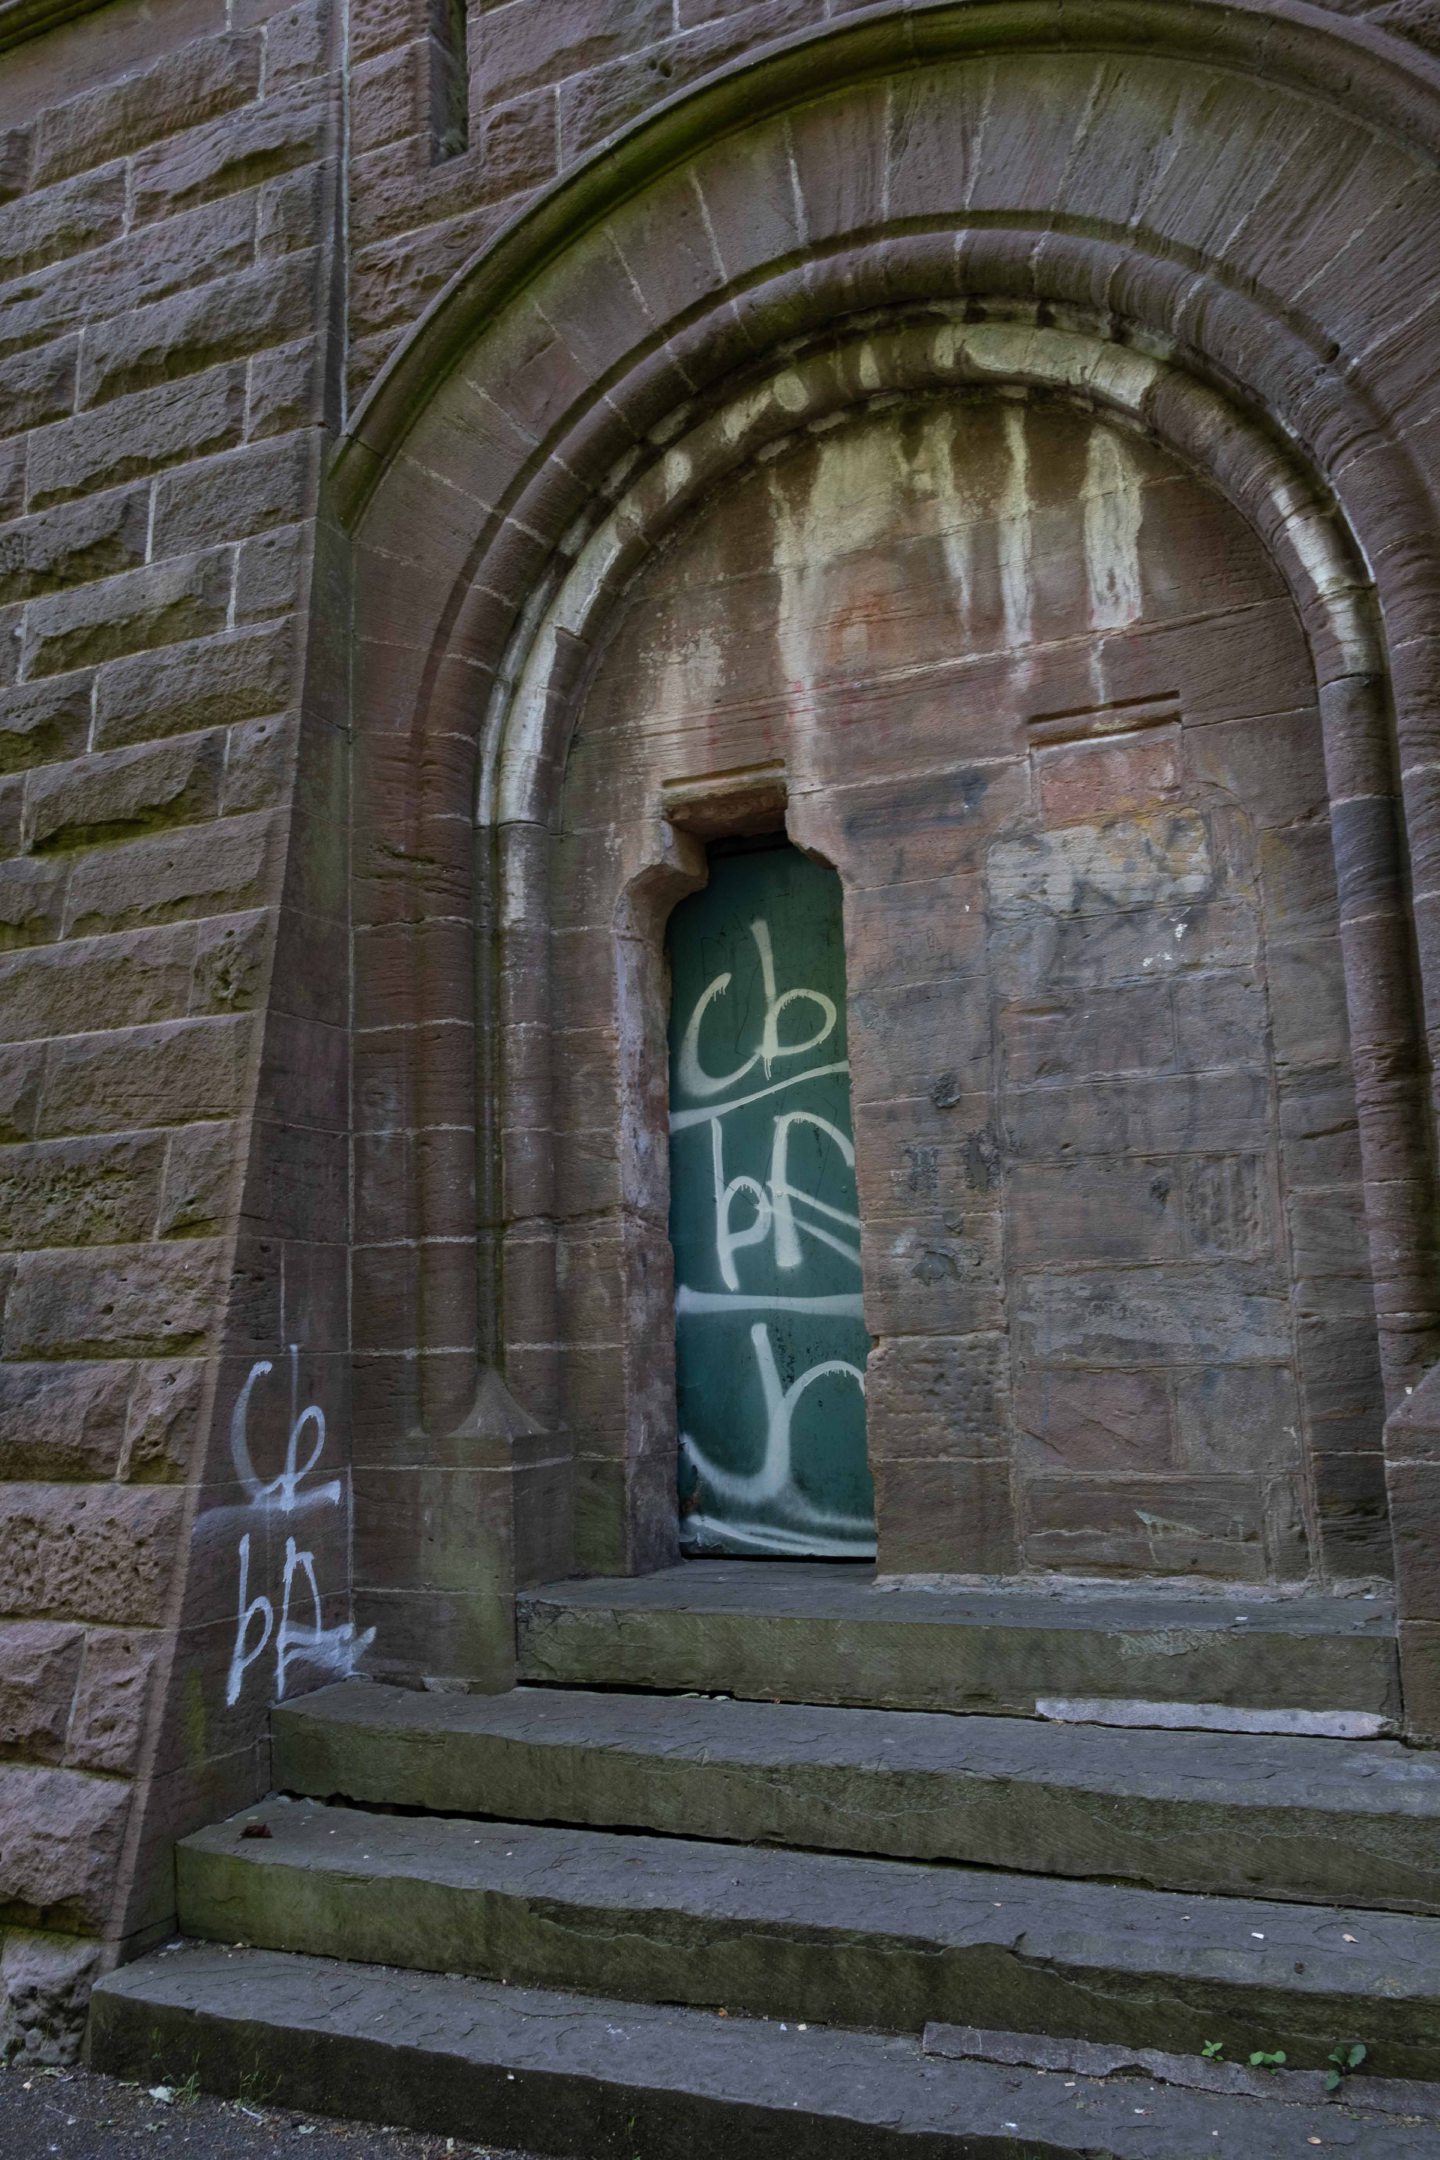 Vandals struck at Arbroath's historic Water Tower. Pic: Paul Reid.